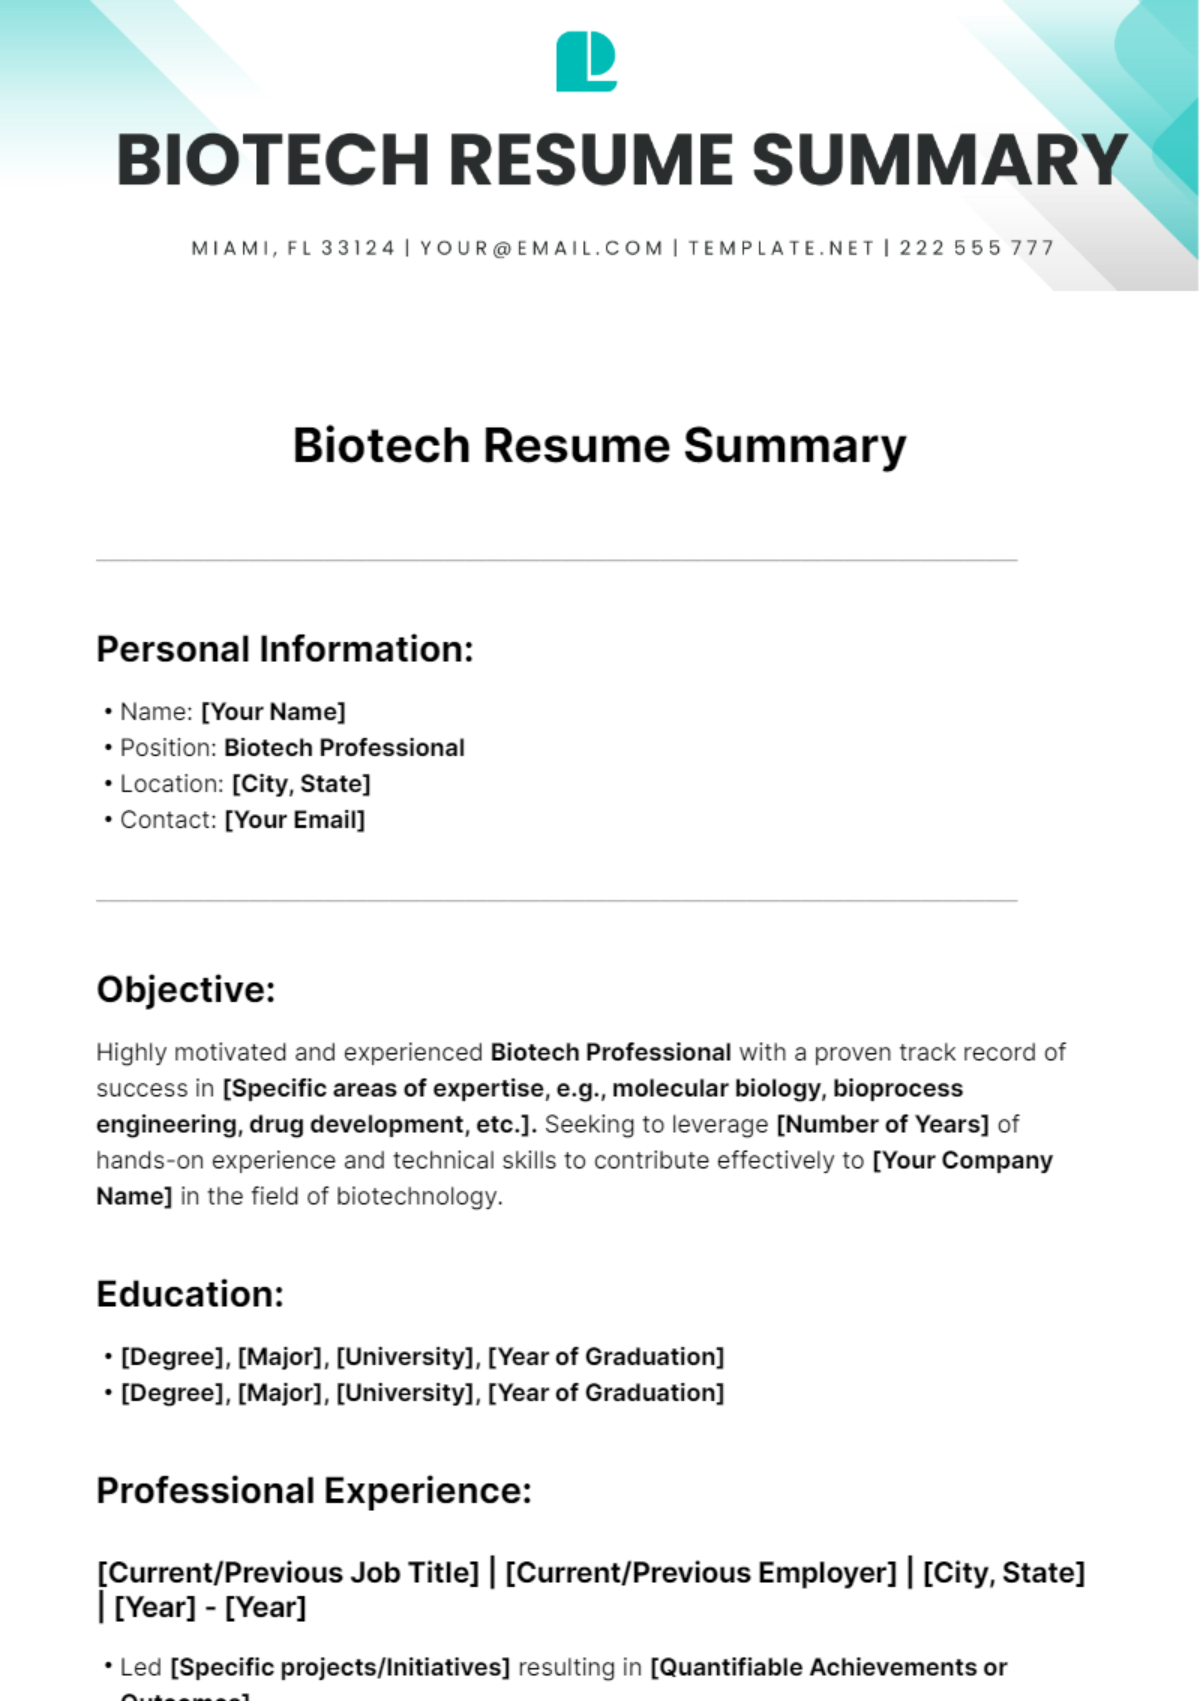 Free Biotech Resume Summary Template